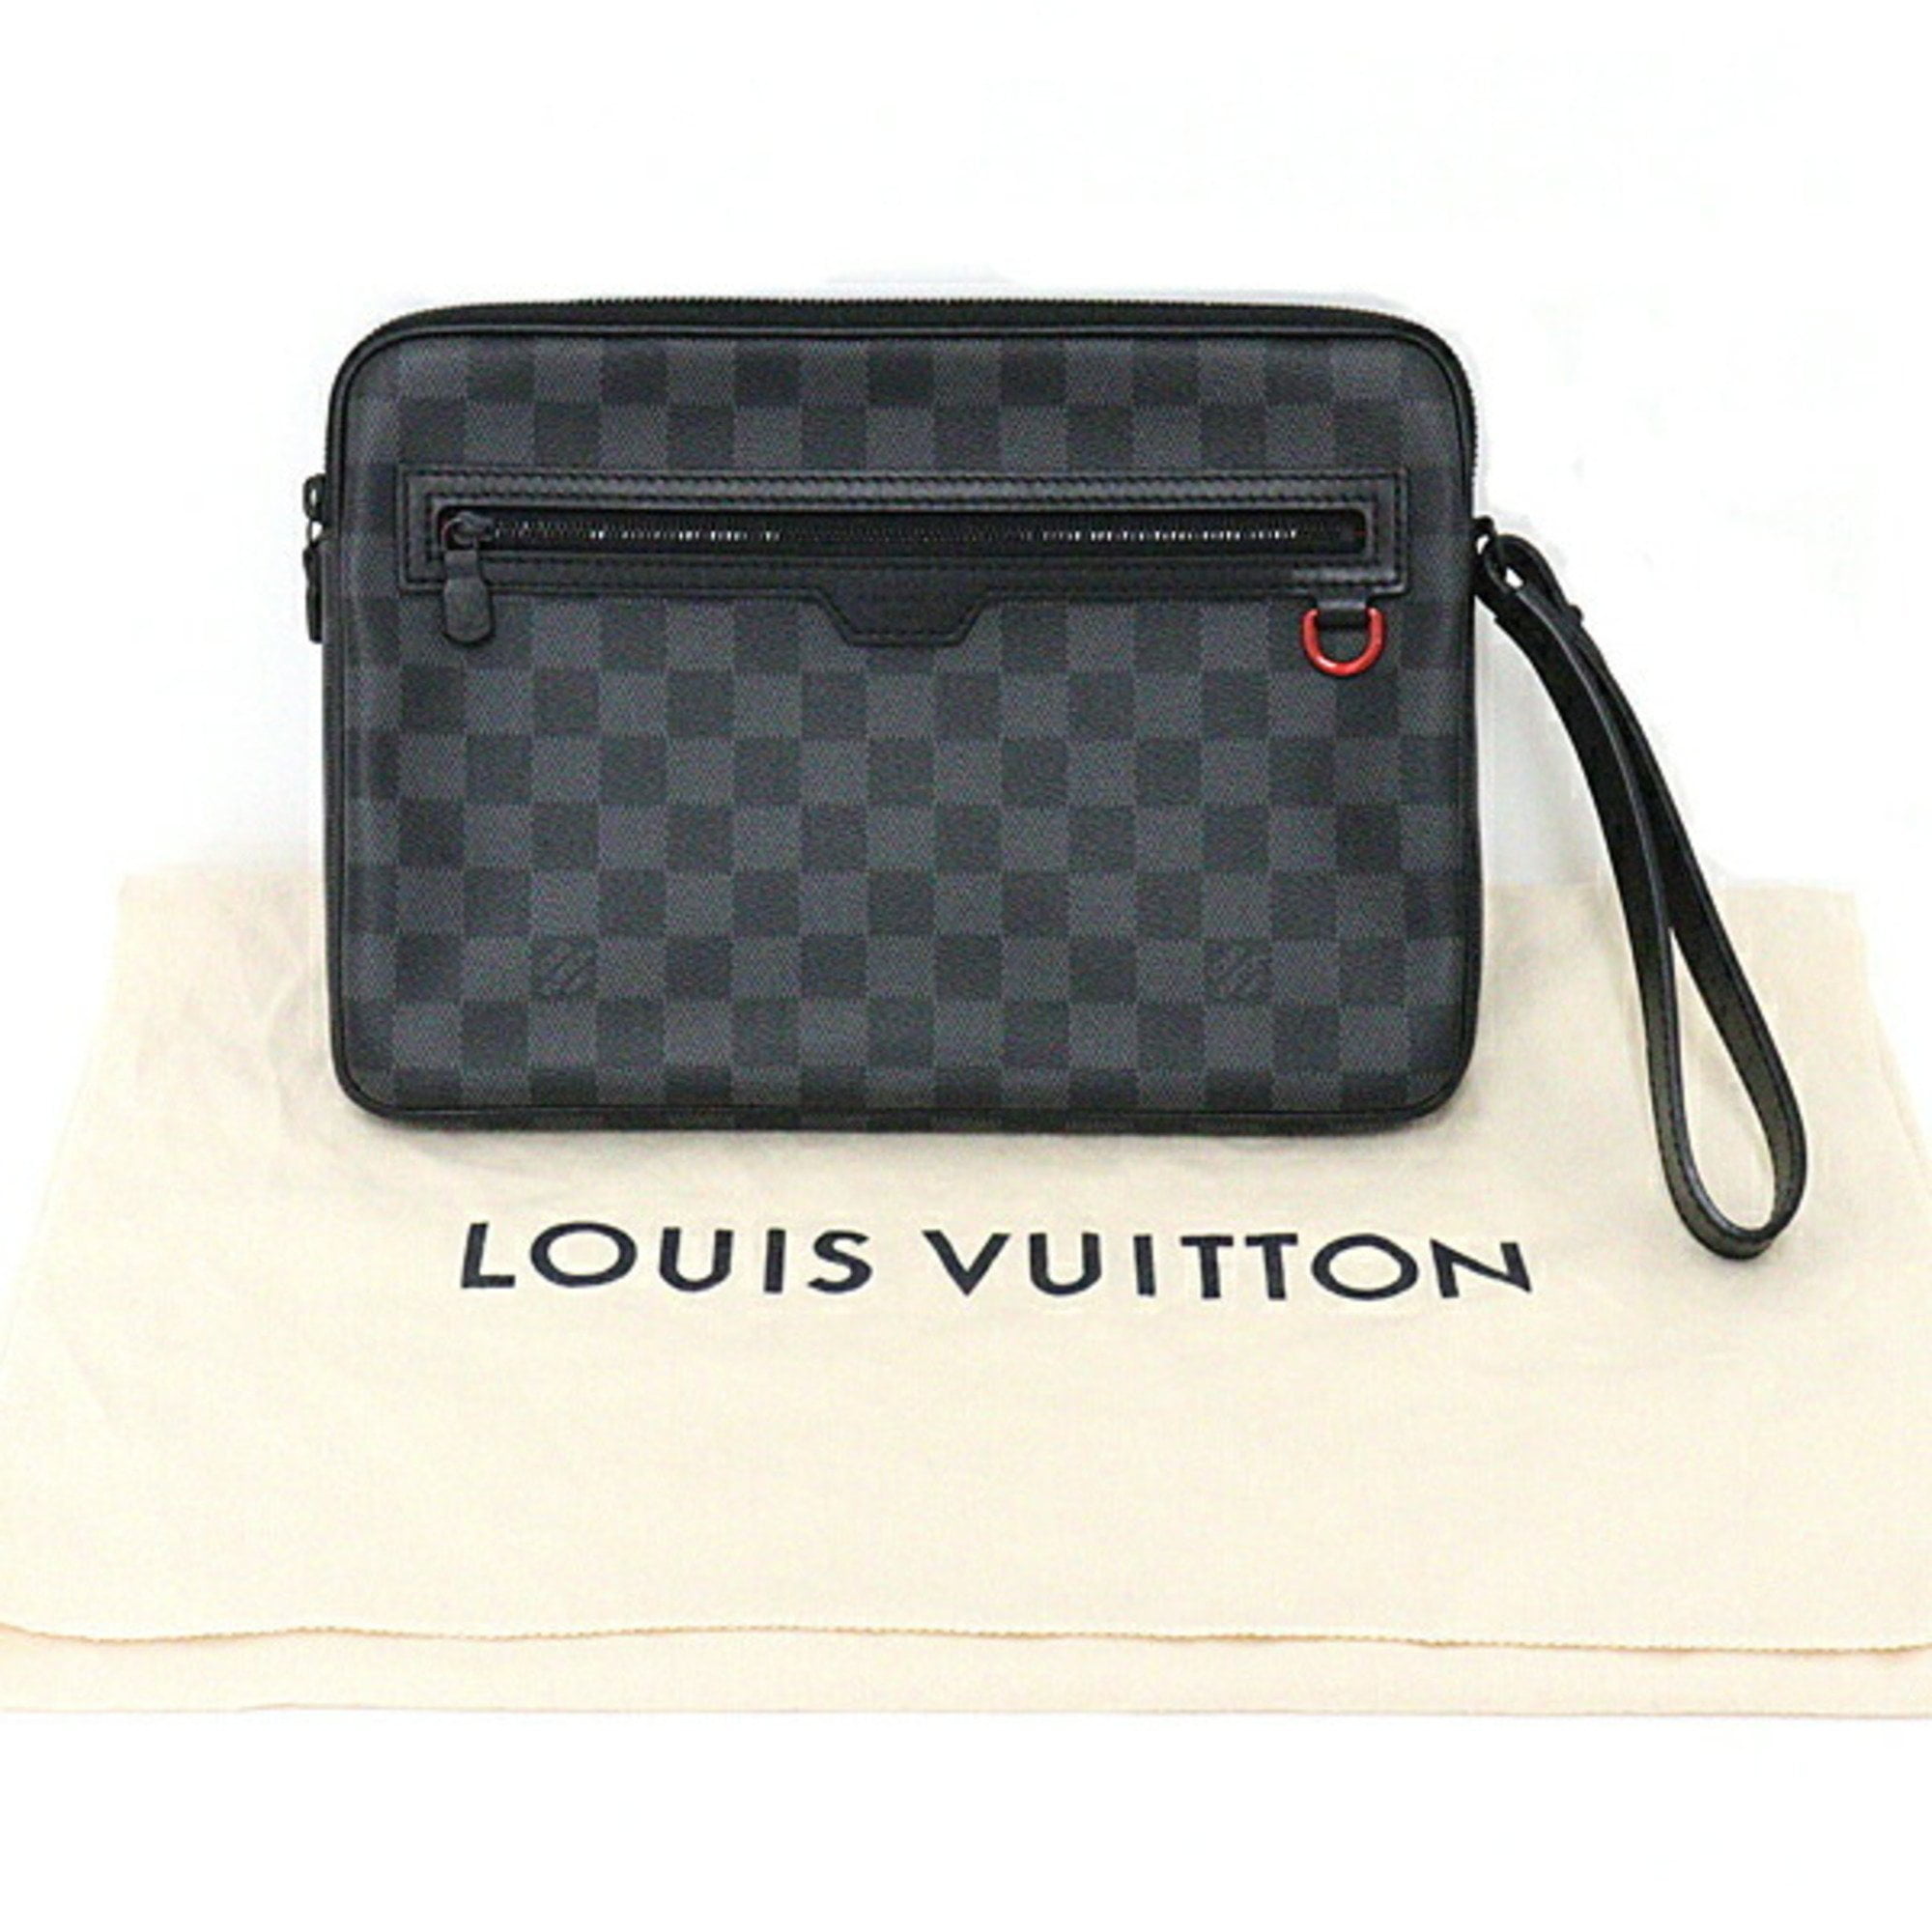 Chanel - Louis Vuitton, Sale n°2822, Lot n°60